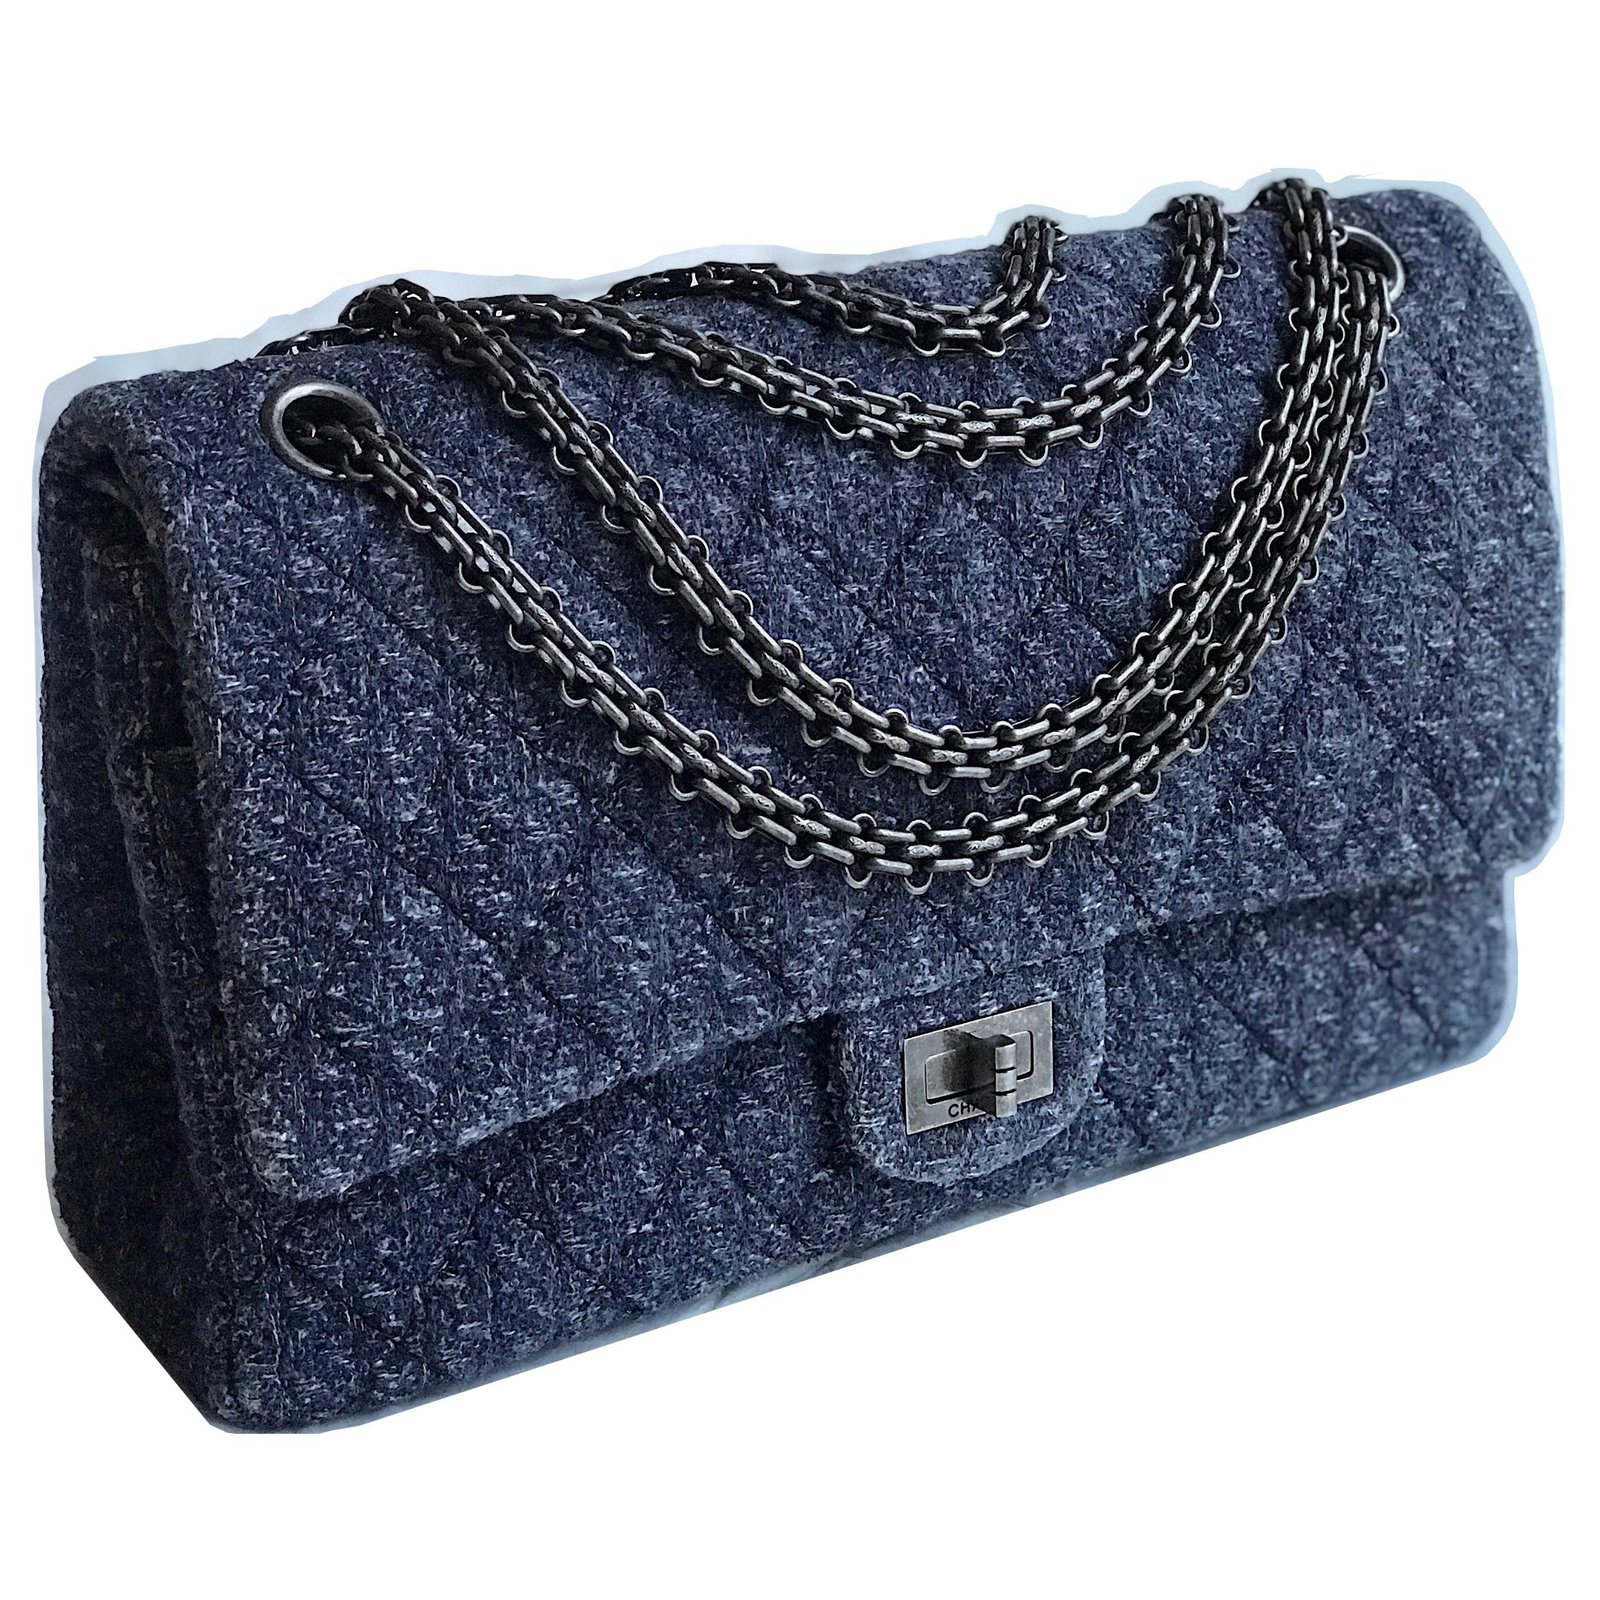 blue chanel tweed bag